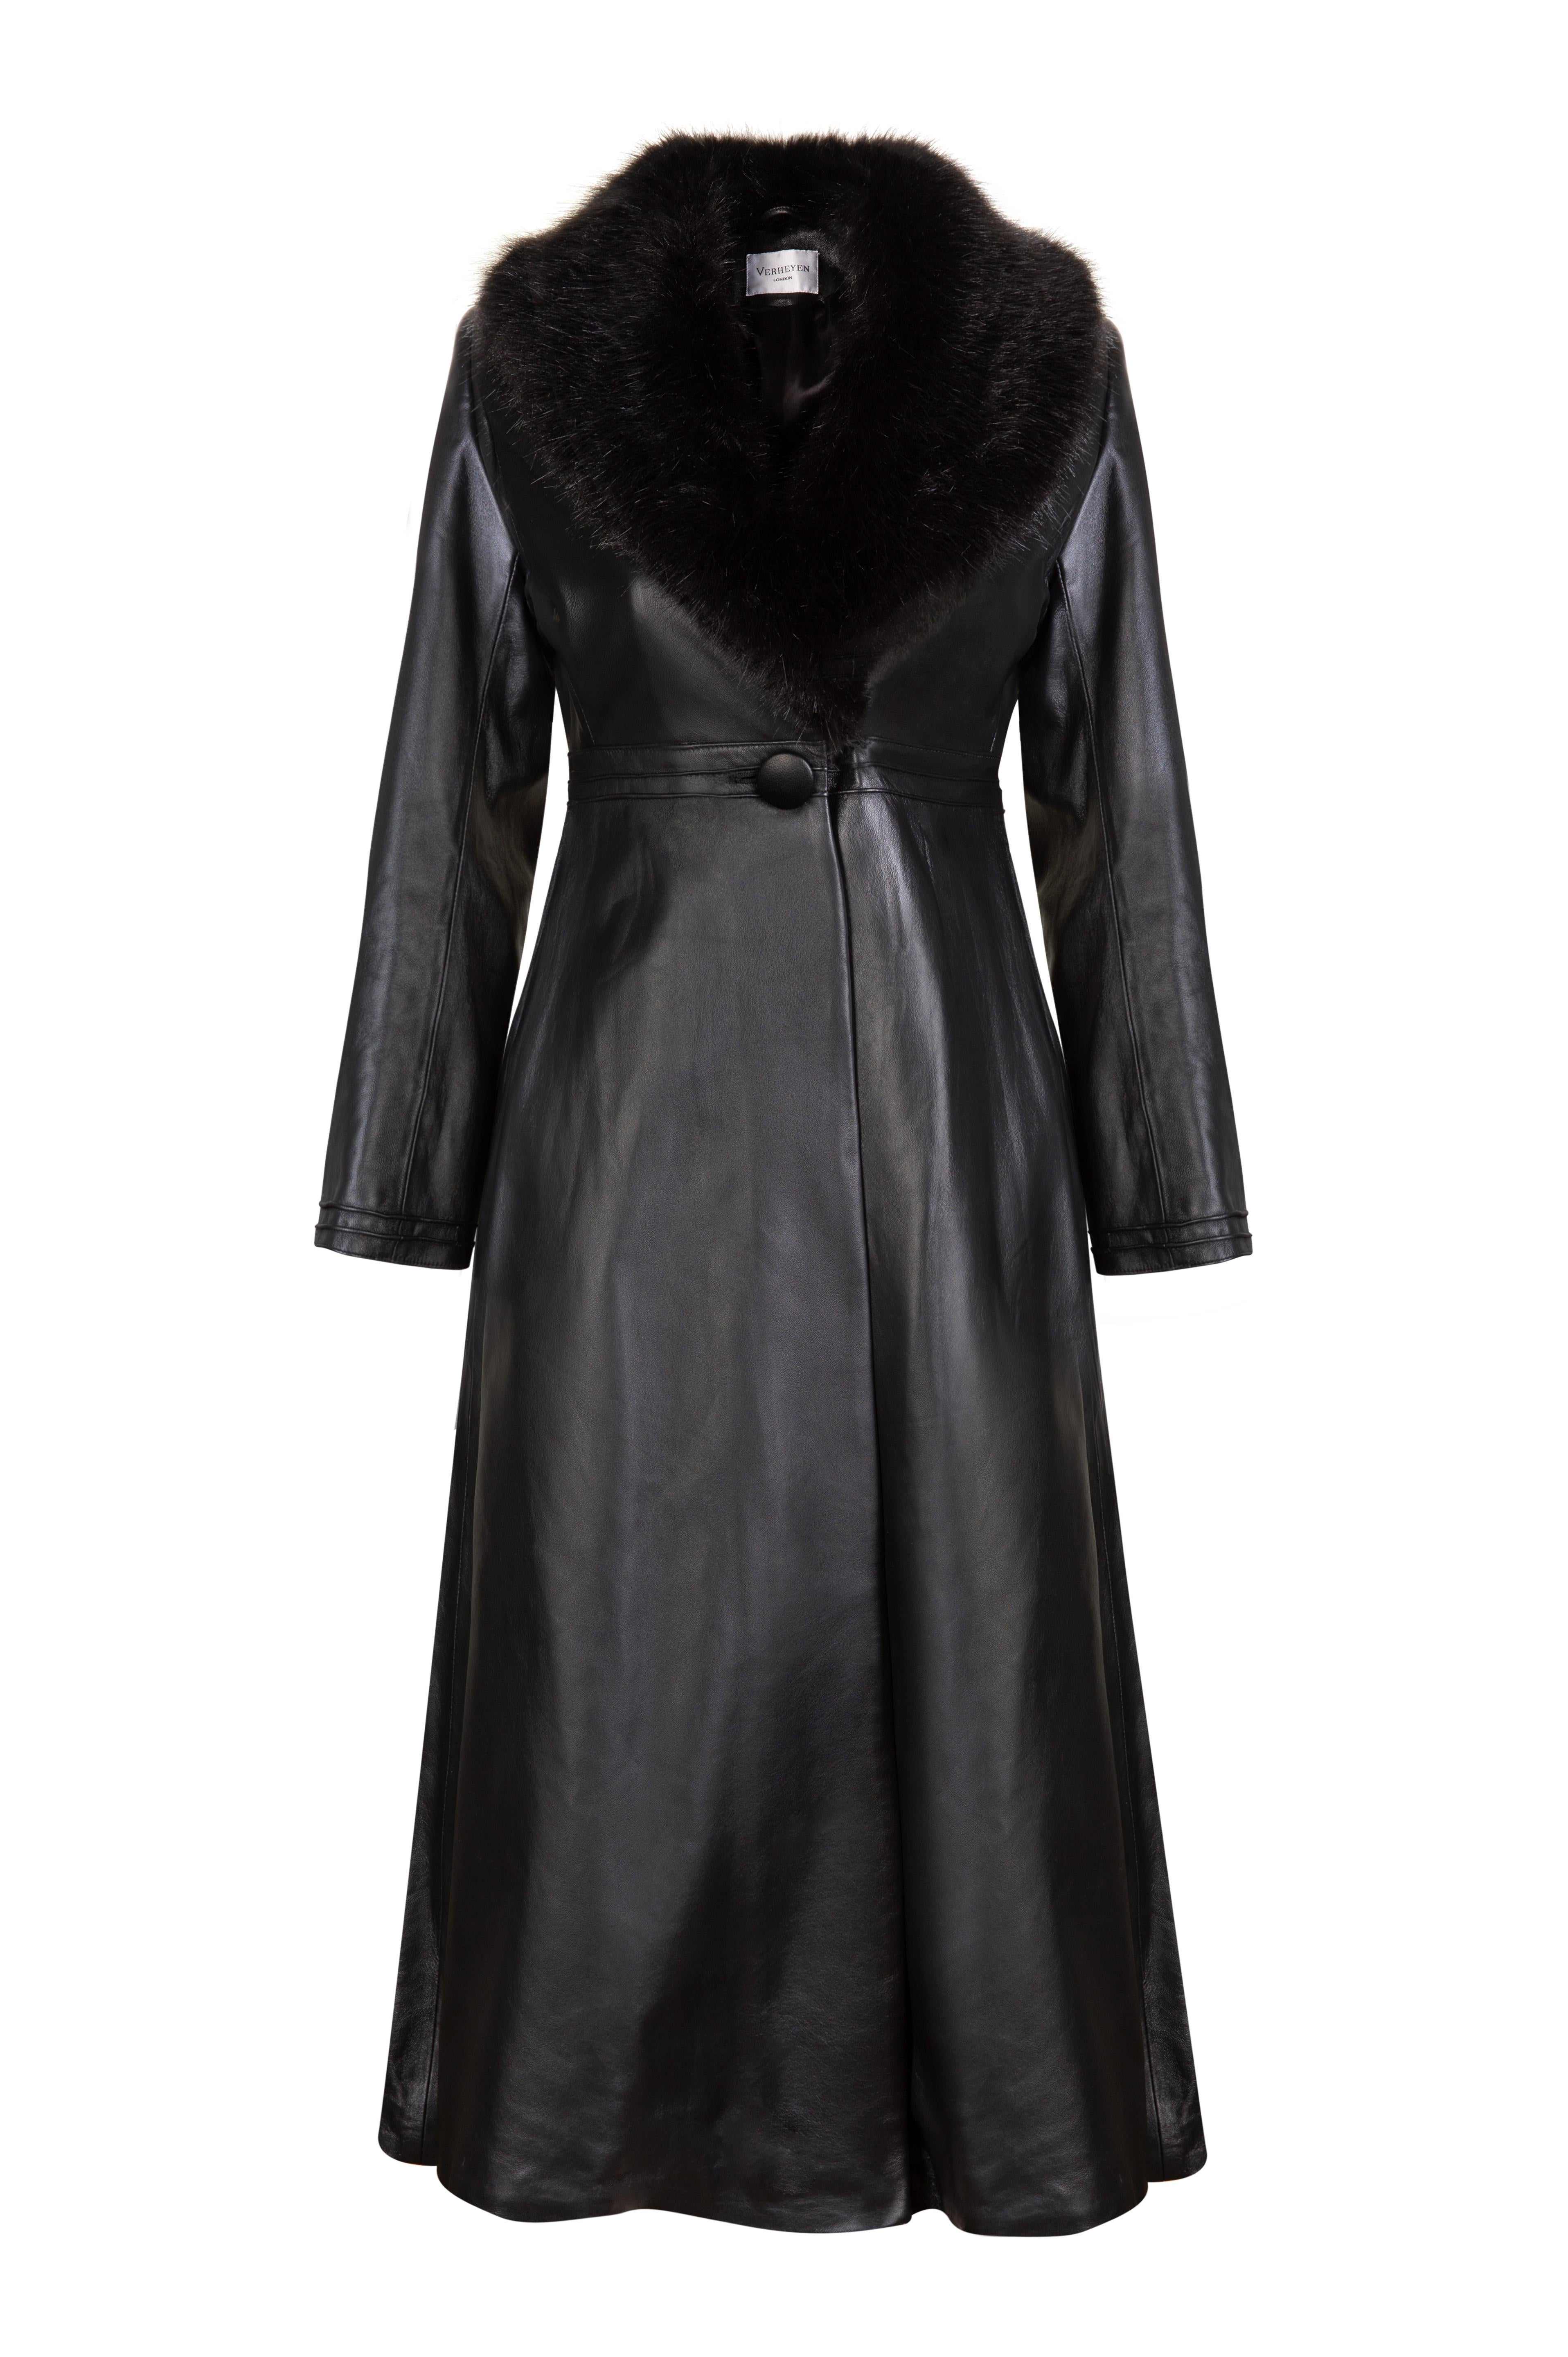 Verheyen London Edward Leather Coat with Faux Fur Collar in Black - Size uk 14 For Sale 12